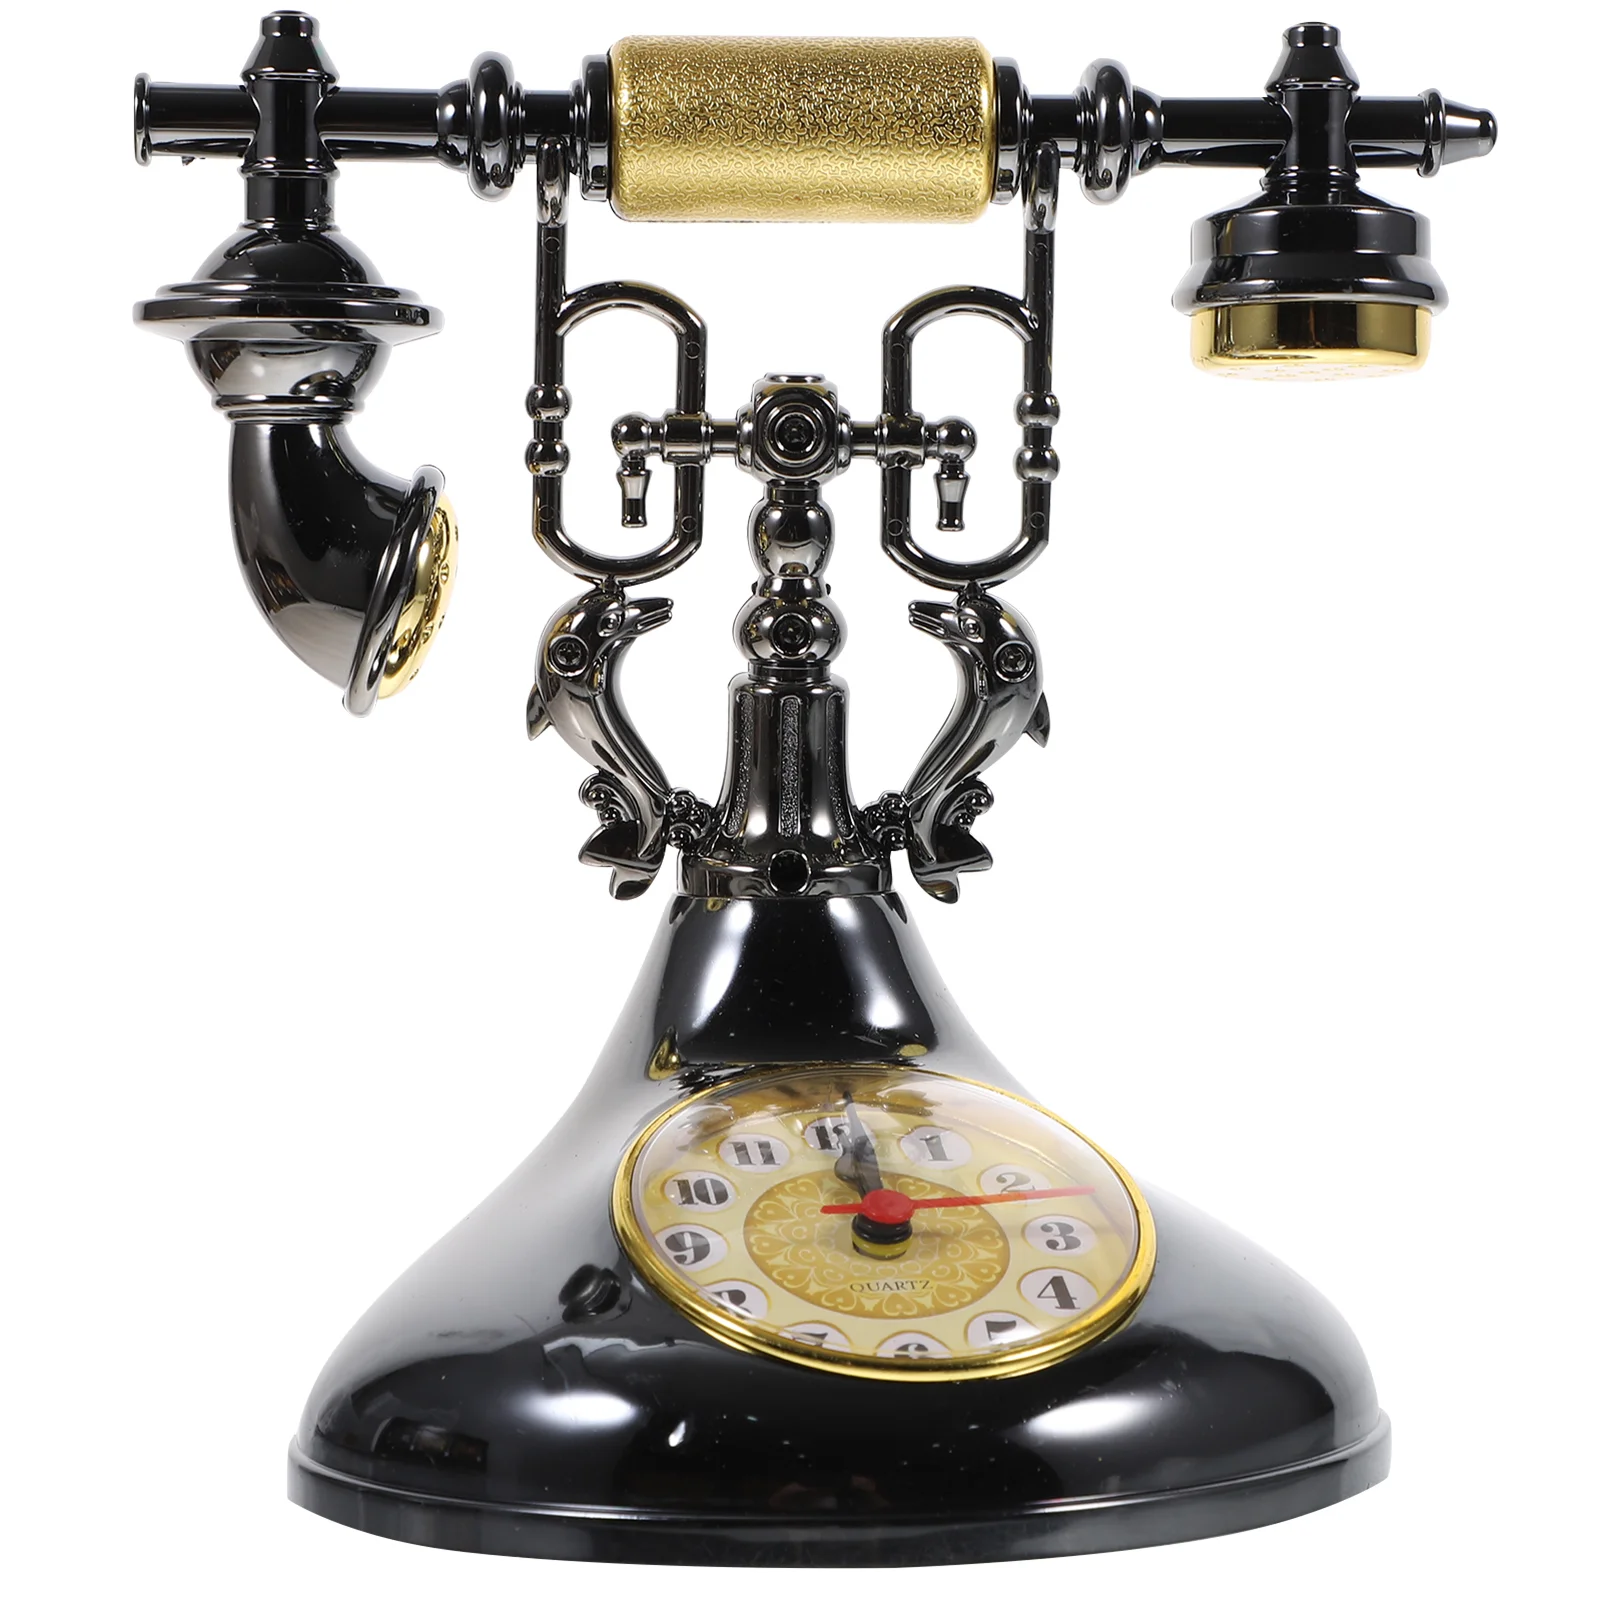 

Telephone Figurine Retro Decor Tabletop Clock Landline Roman Numeral Push Button Dial Office Desktop Silent Alarm